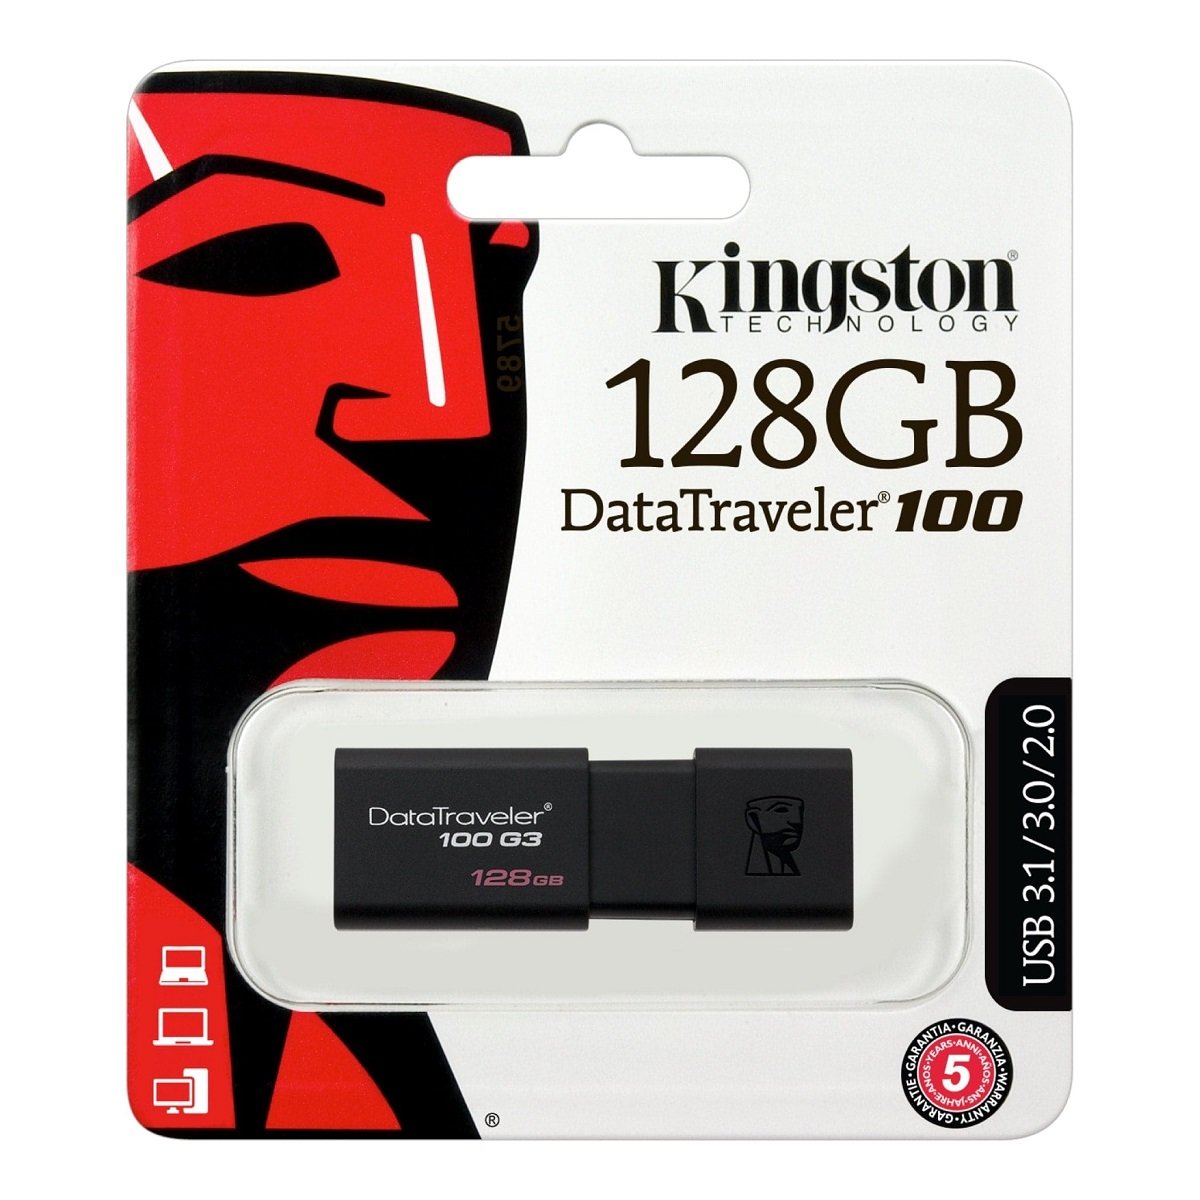 Pendrive Kingston Data Traveler 100 G3 128GB USB 3.0 DT100G3/128GB opakowanie od przodu